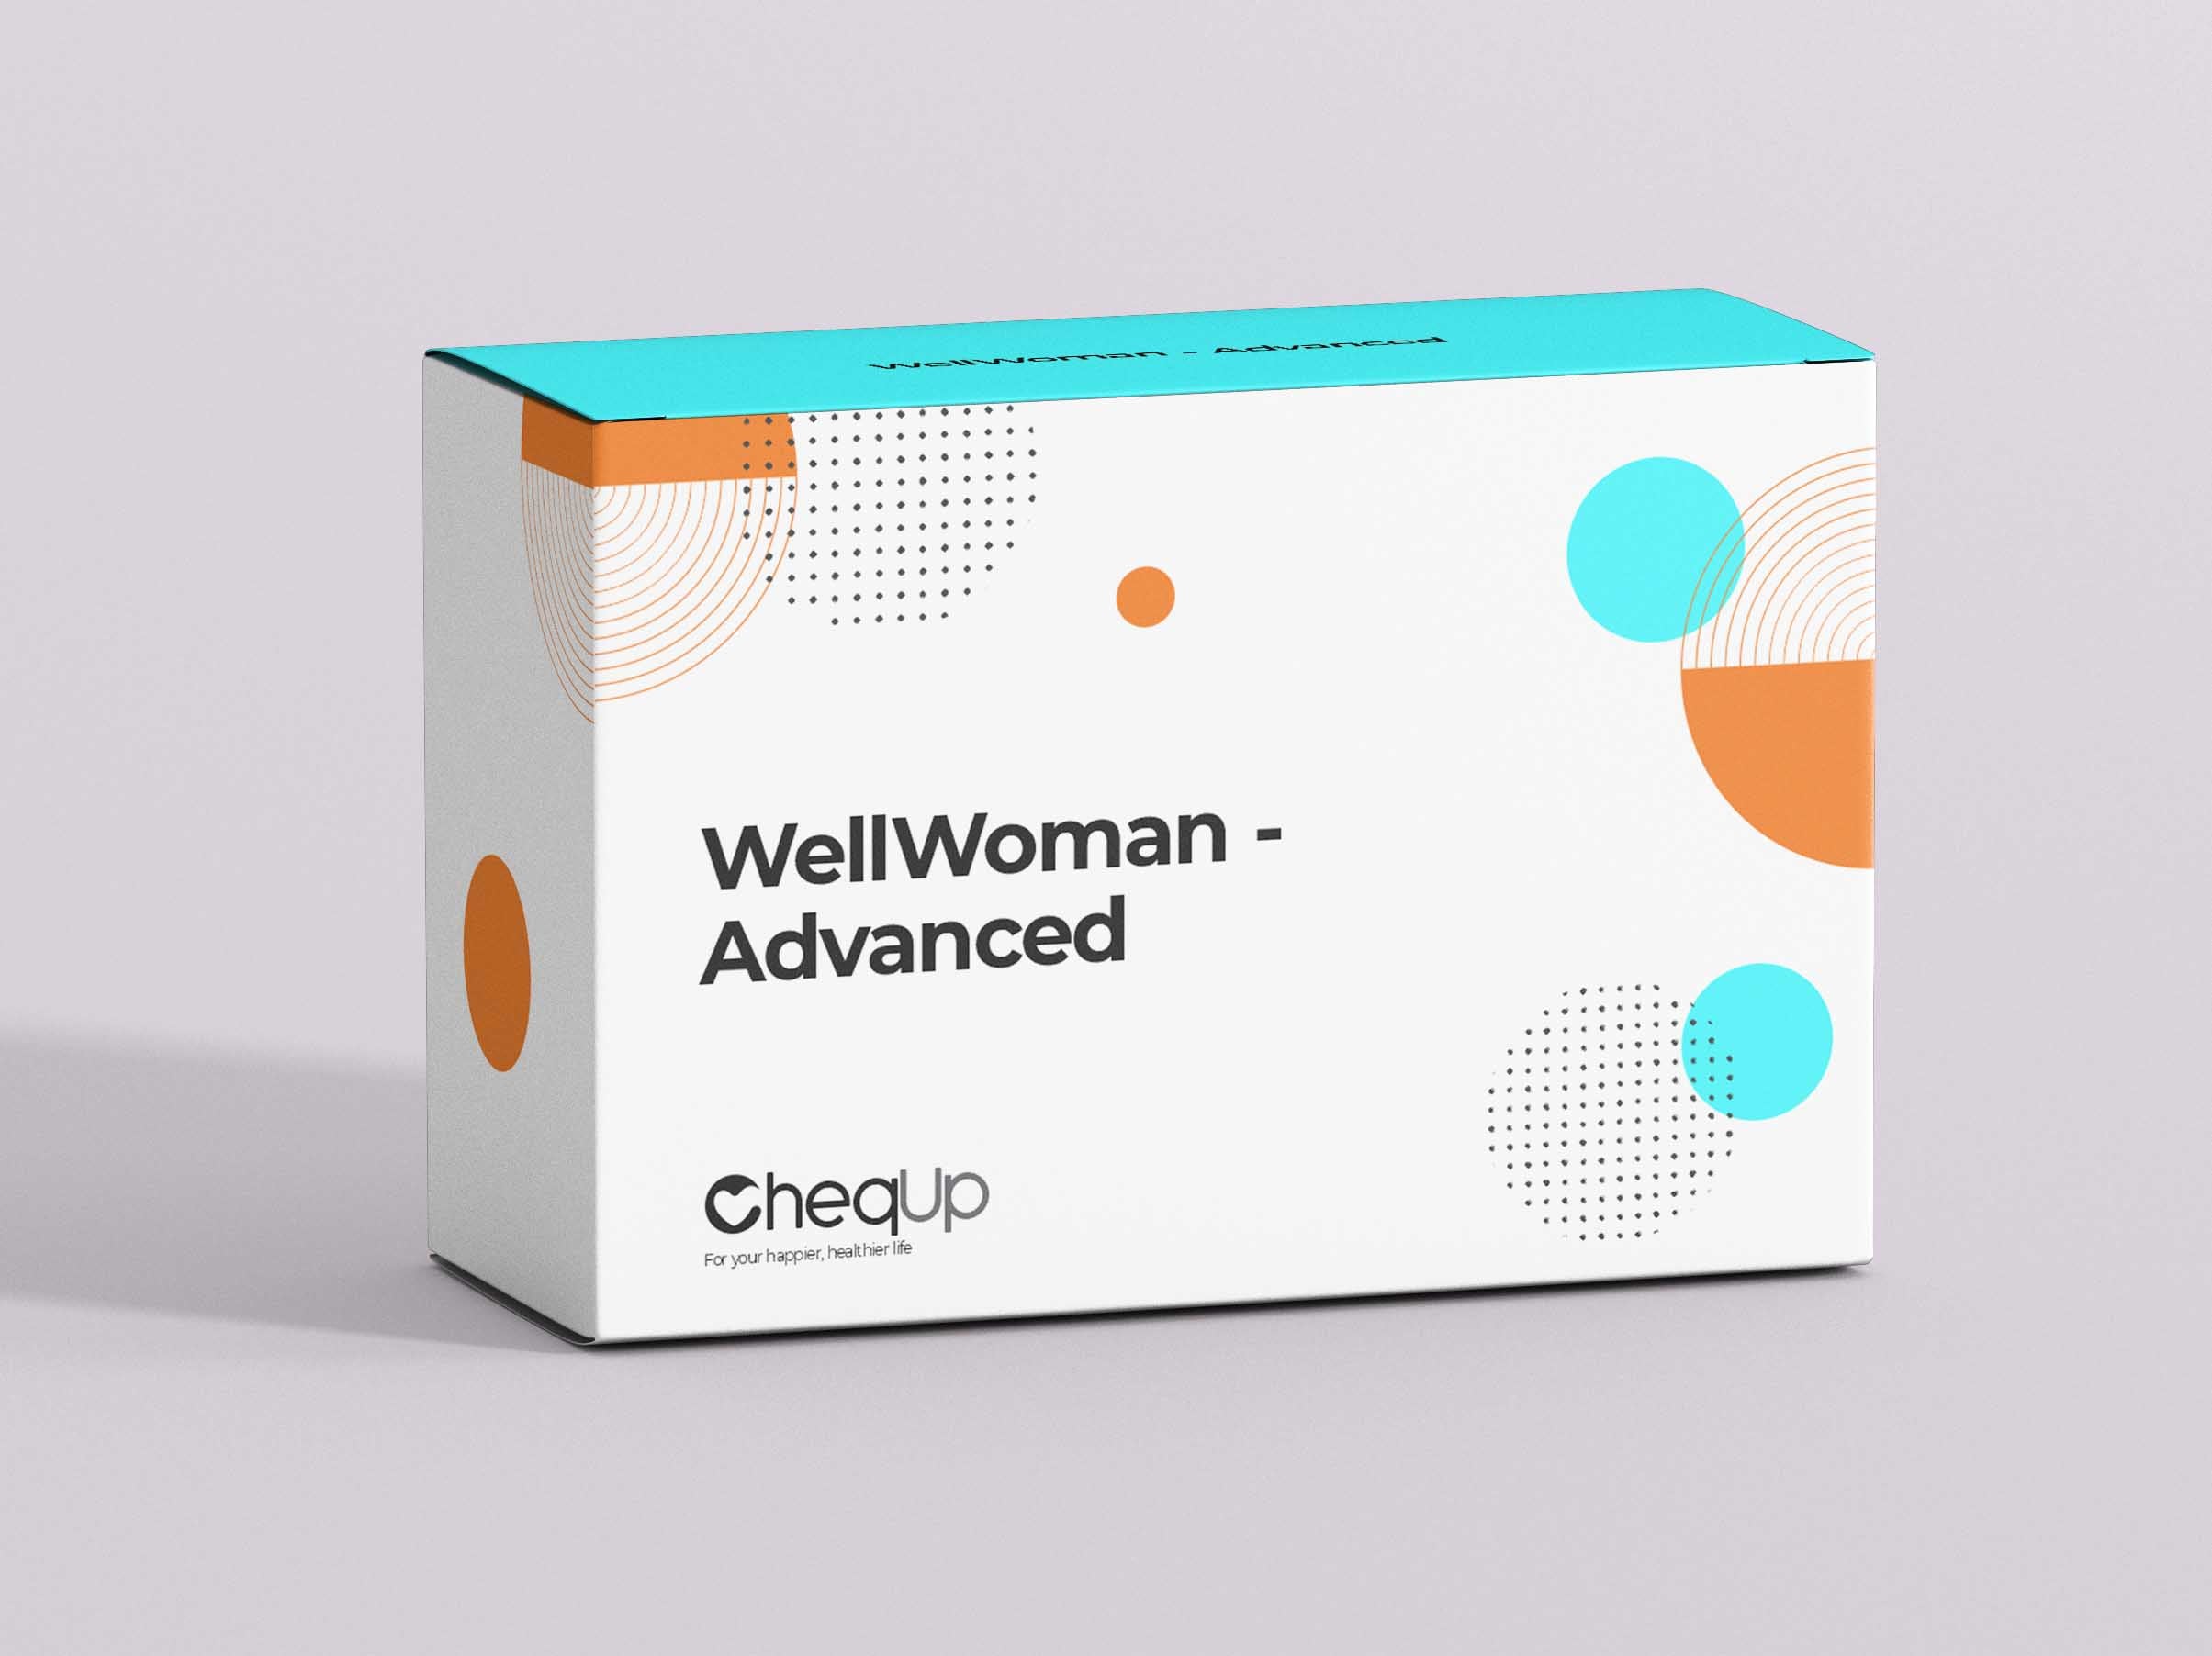 WellWoman - Advanced